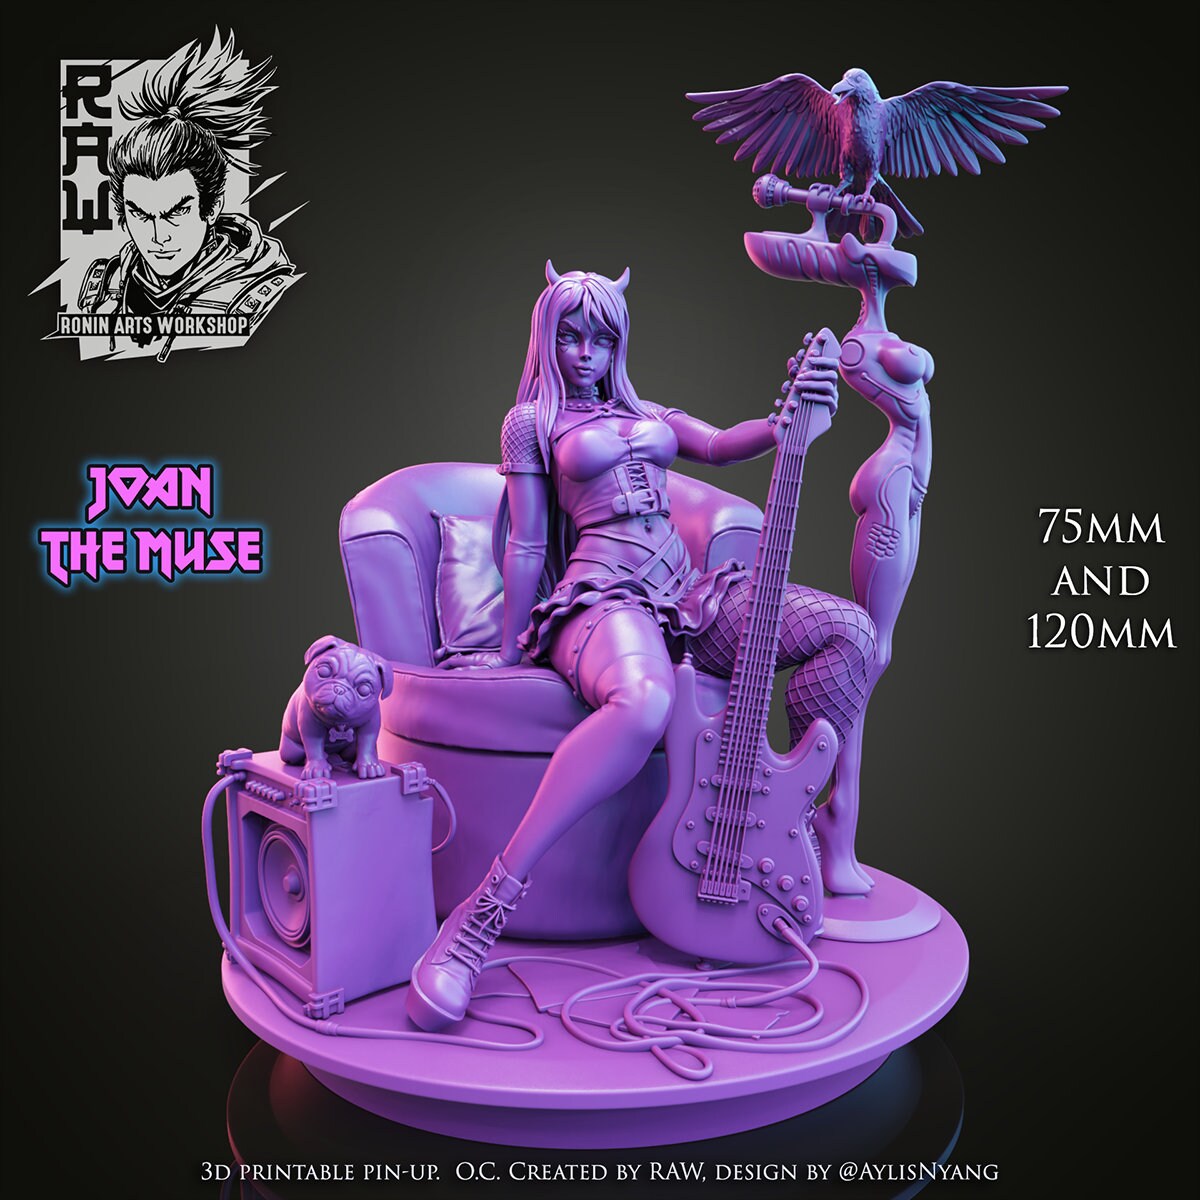 Joan - Pinup Punk Rock Girl | Clothed or Nude | Resin 3D Printed Pinup | Ronin Arts Workshop